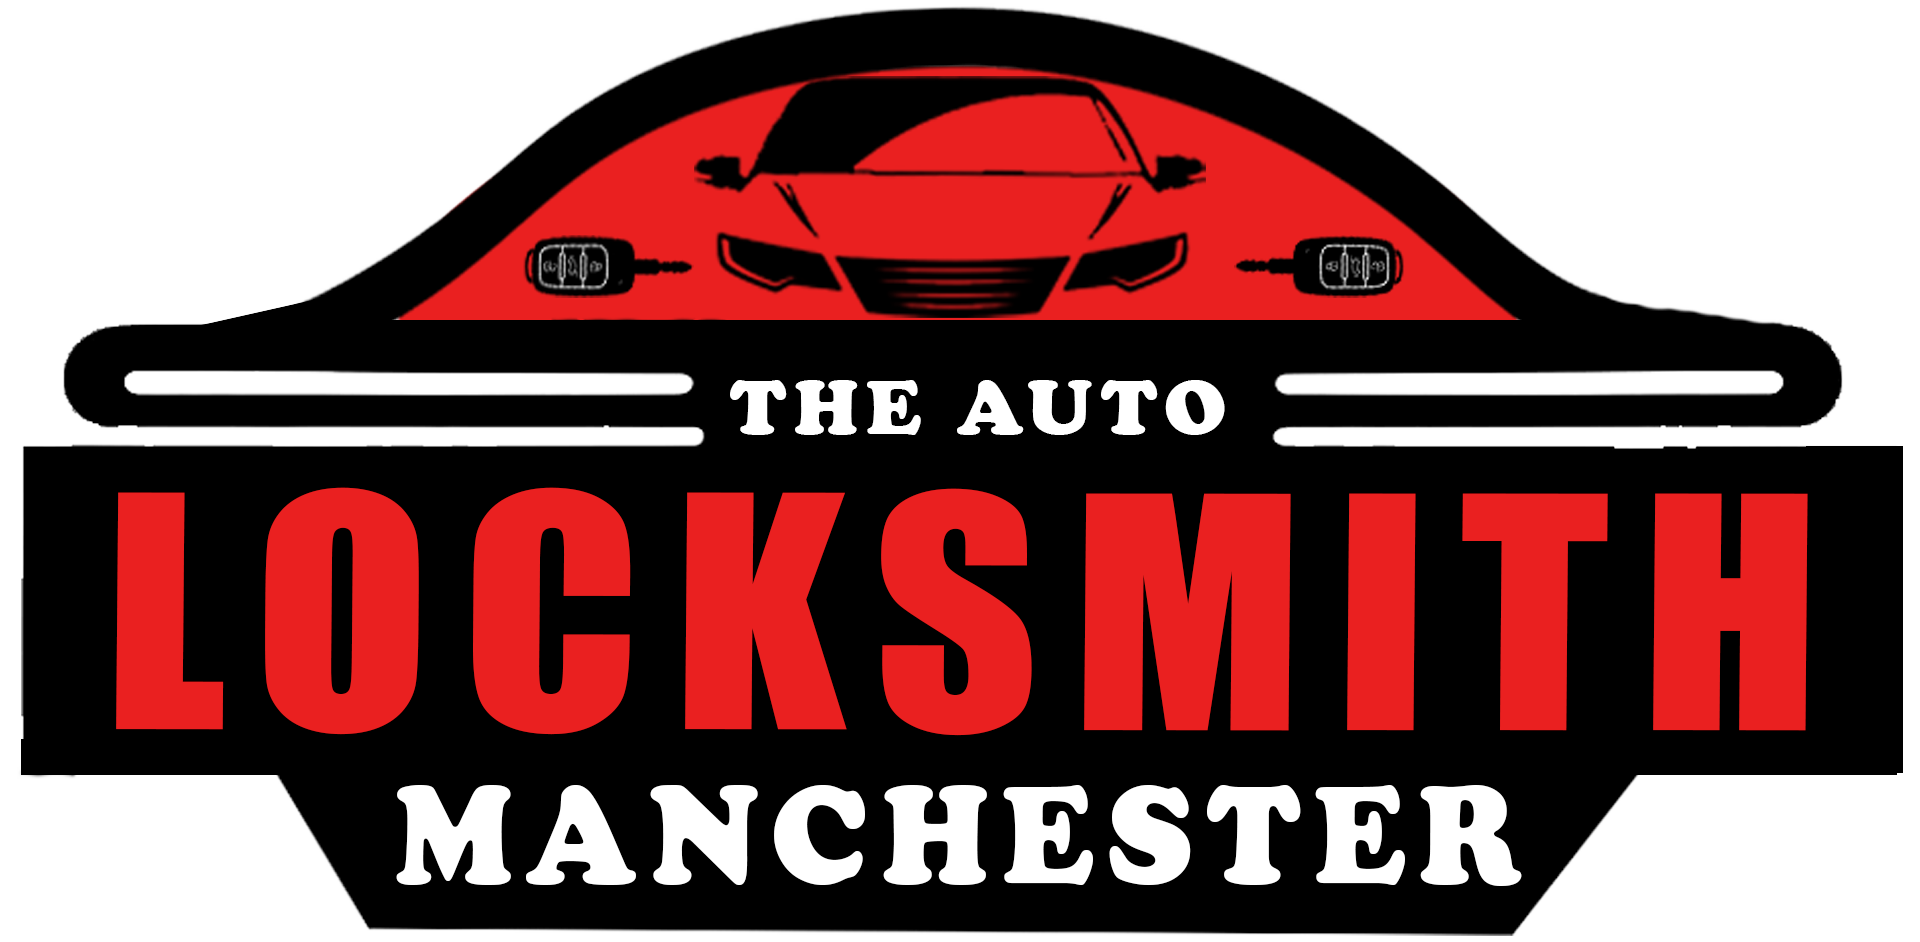 The Auto Locksmith Manchester